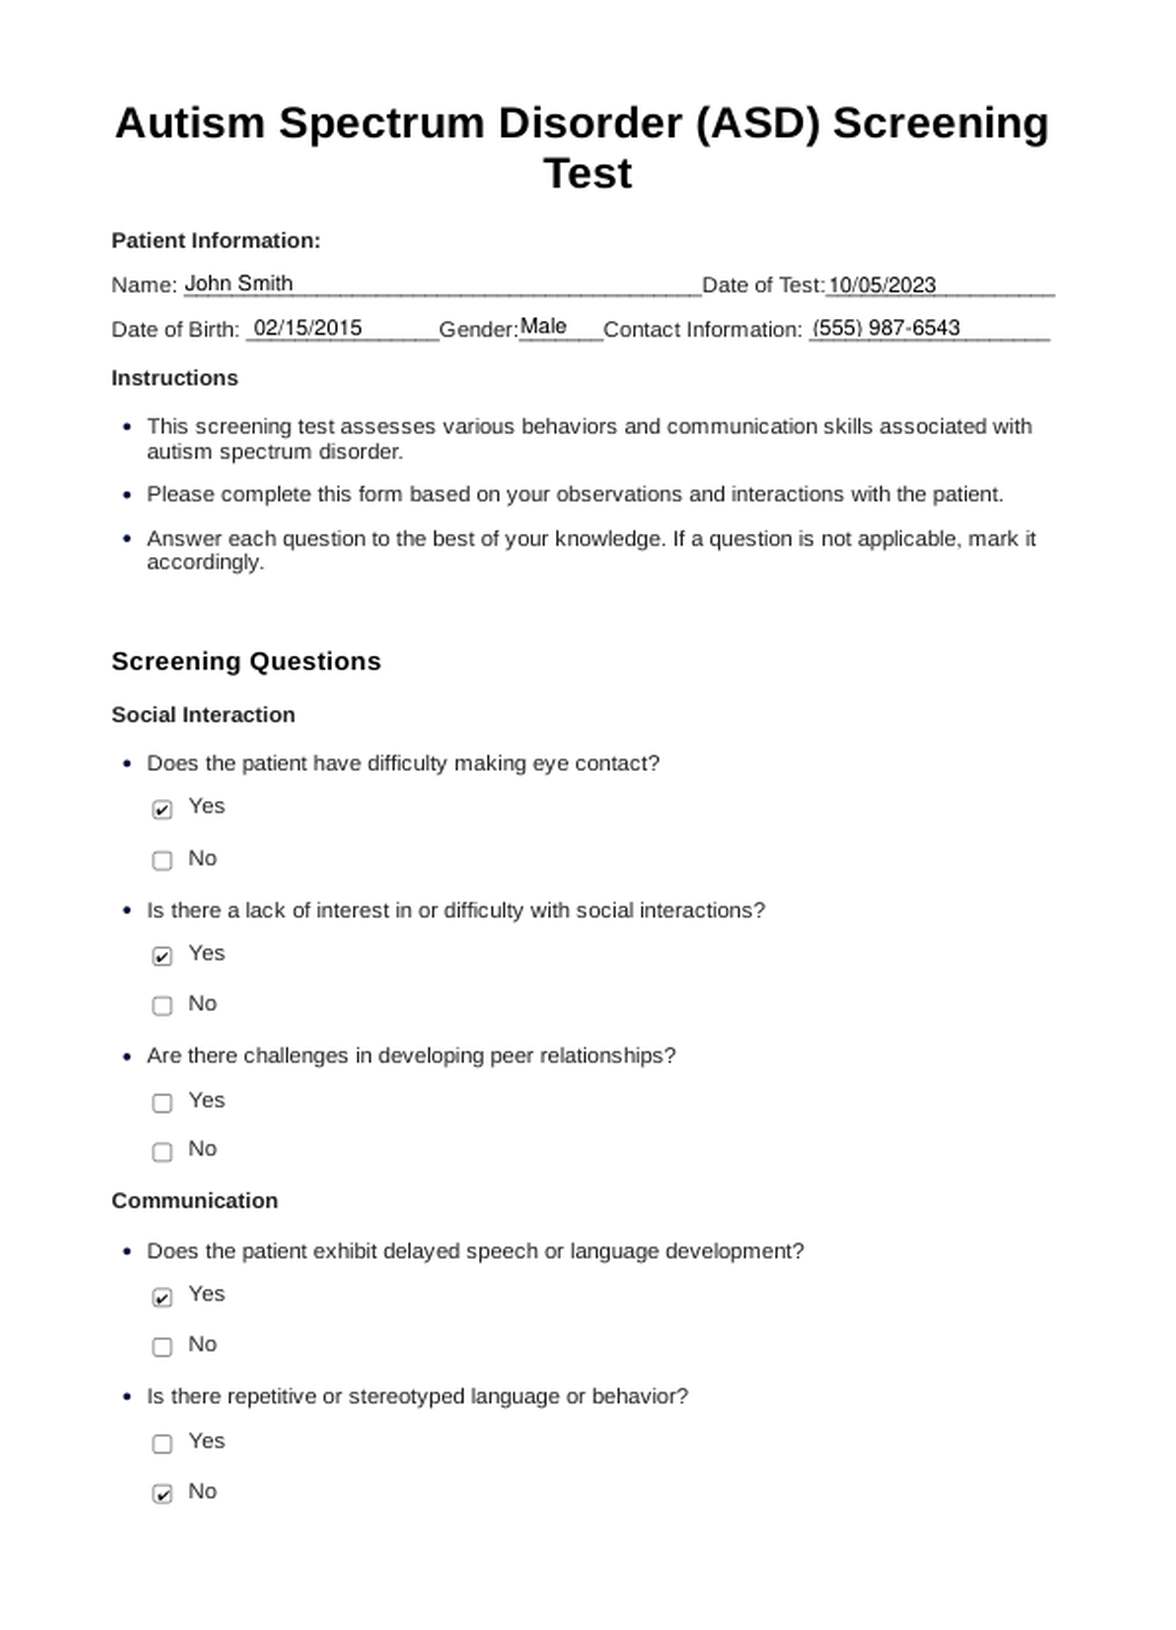 Autism Spectrum Disorder Screening PDF Example